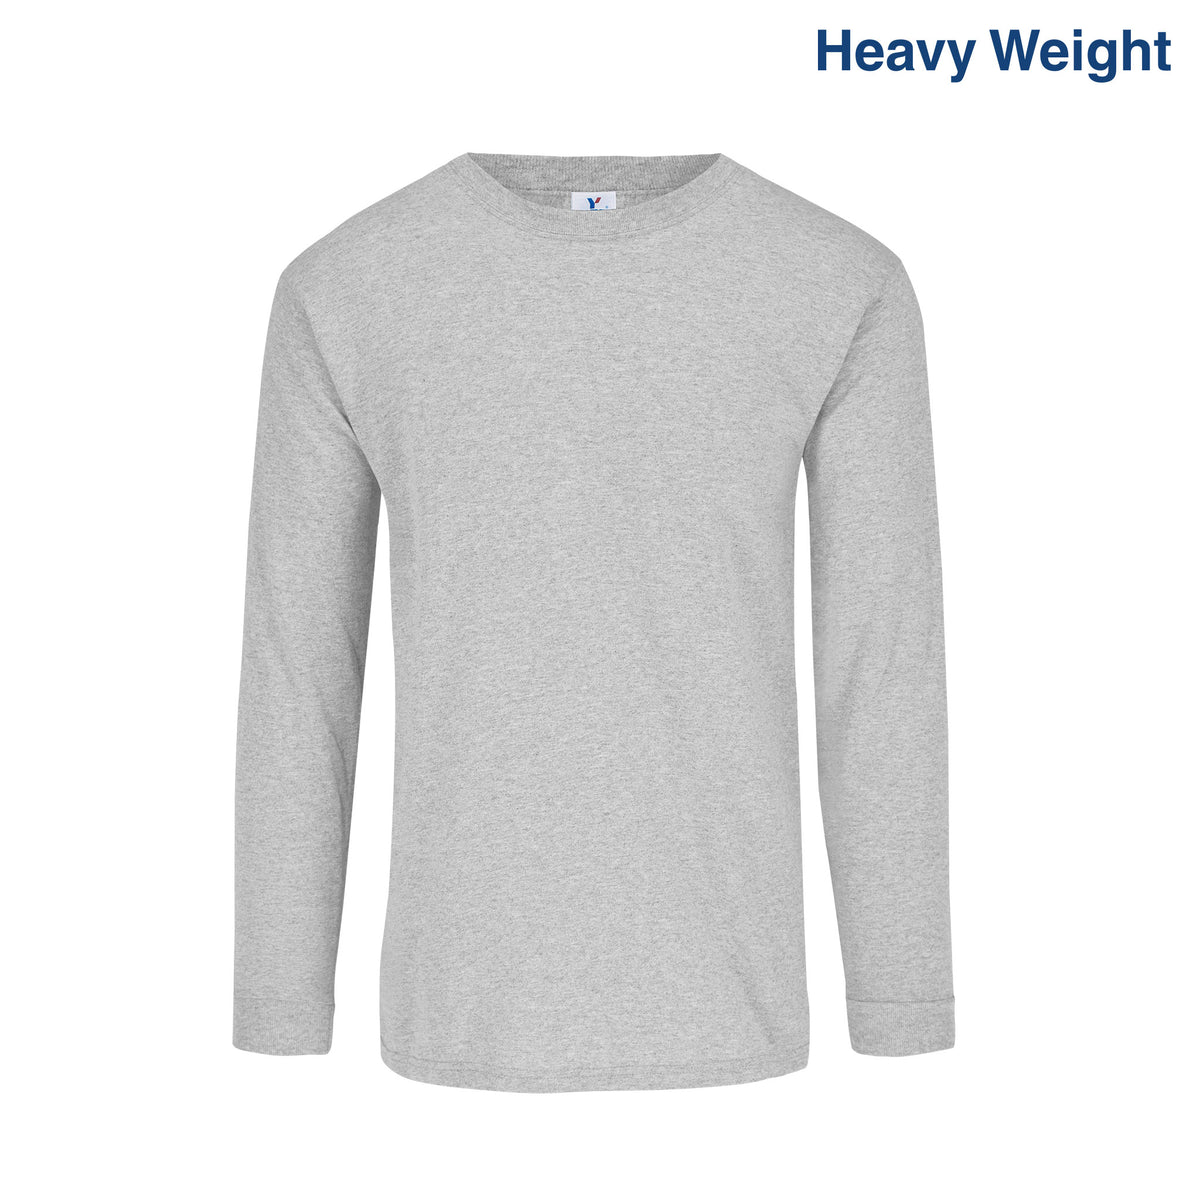 Men’s Heavy Weight Crew Neck Long Sleeve T Shirt (Heather Grey)